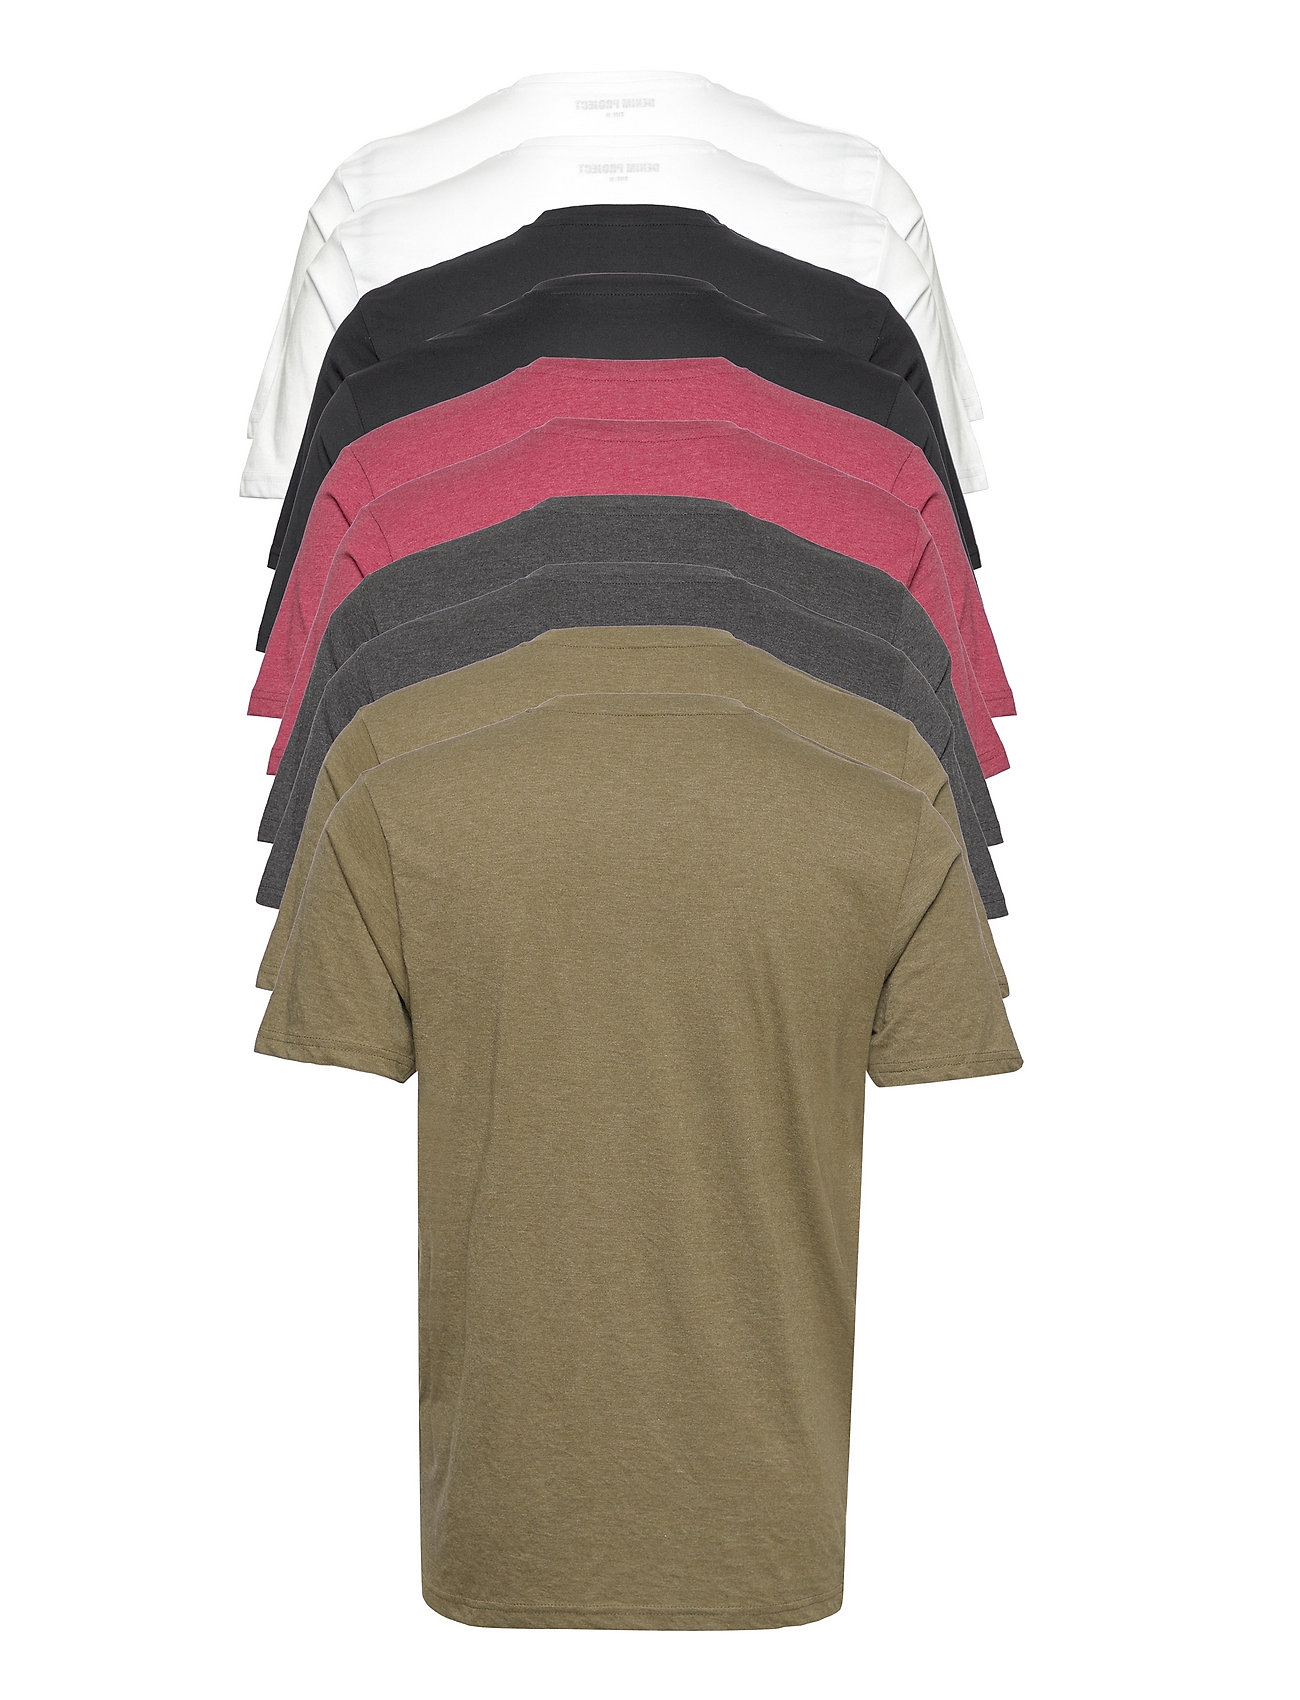 Denim project - 10 Pack T-SHIRT - multipack t-shirts - 2xdgm, 2xolive night melange,2x bordeaux melange, - 1